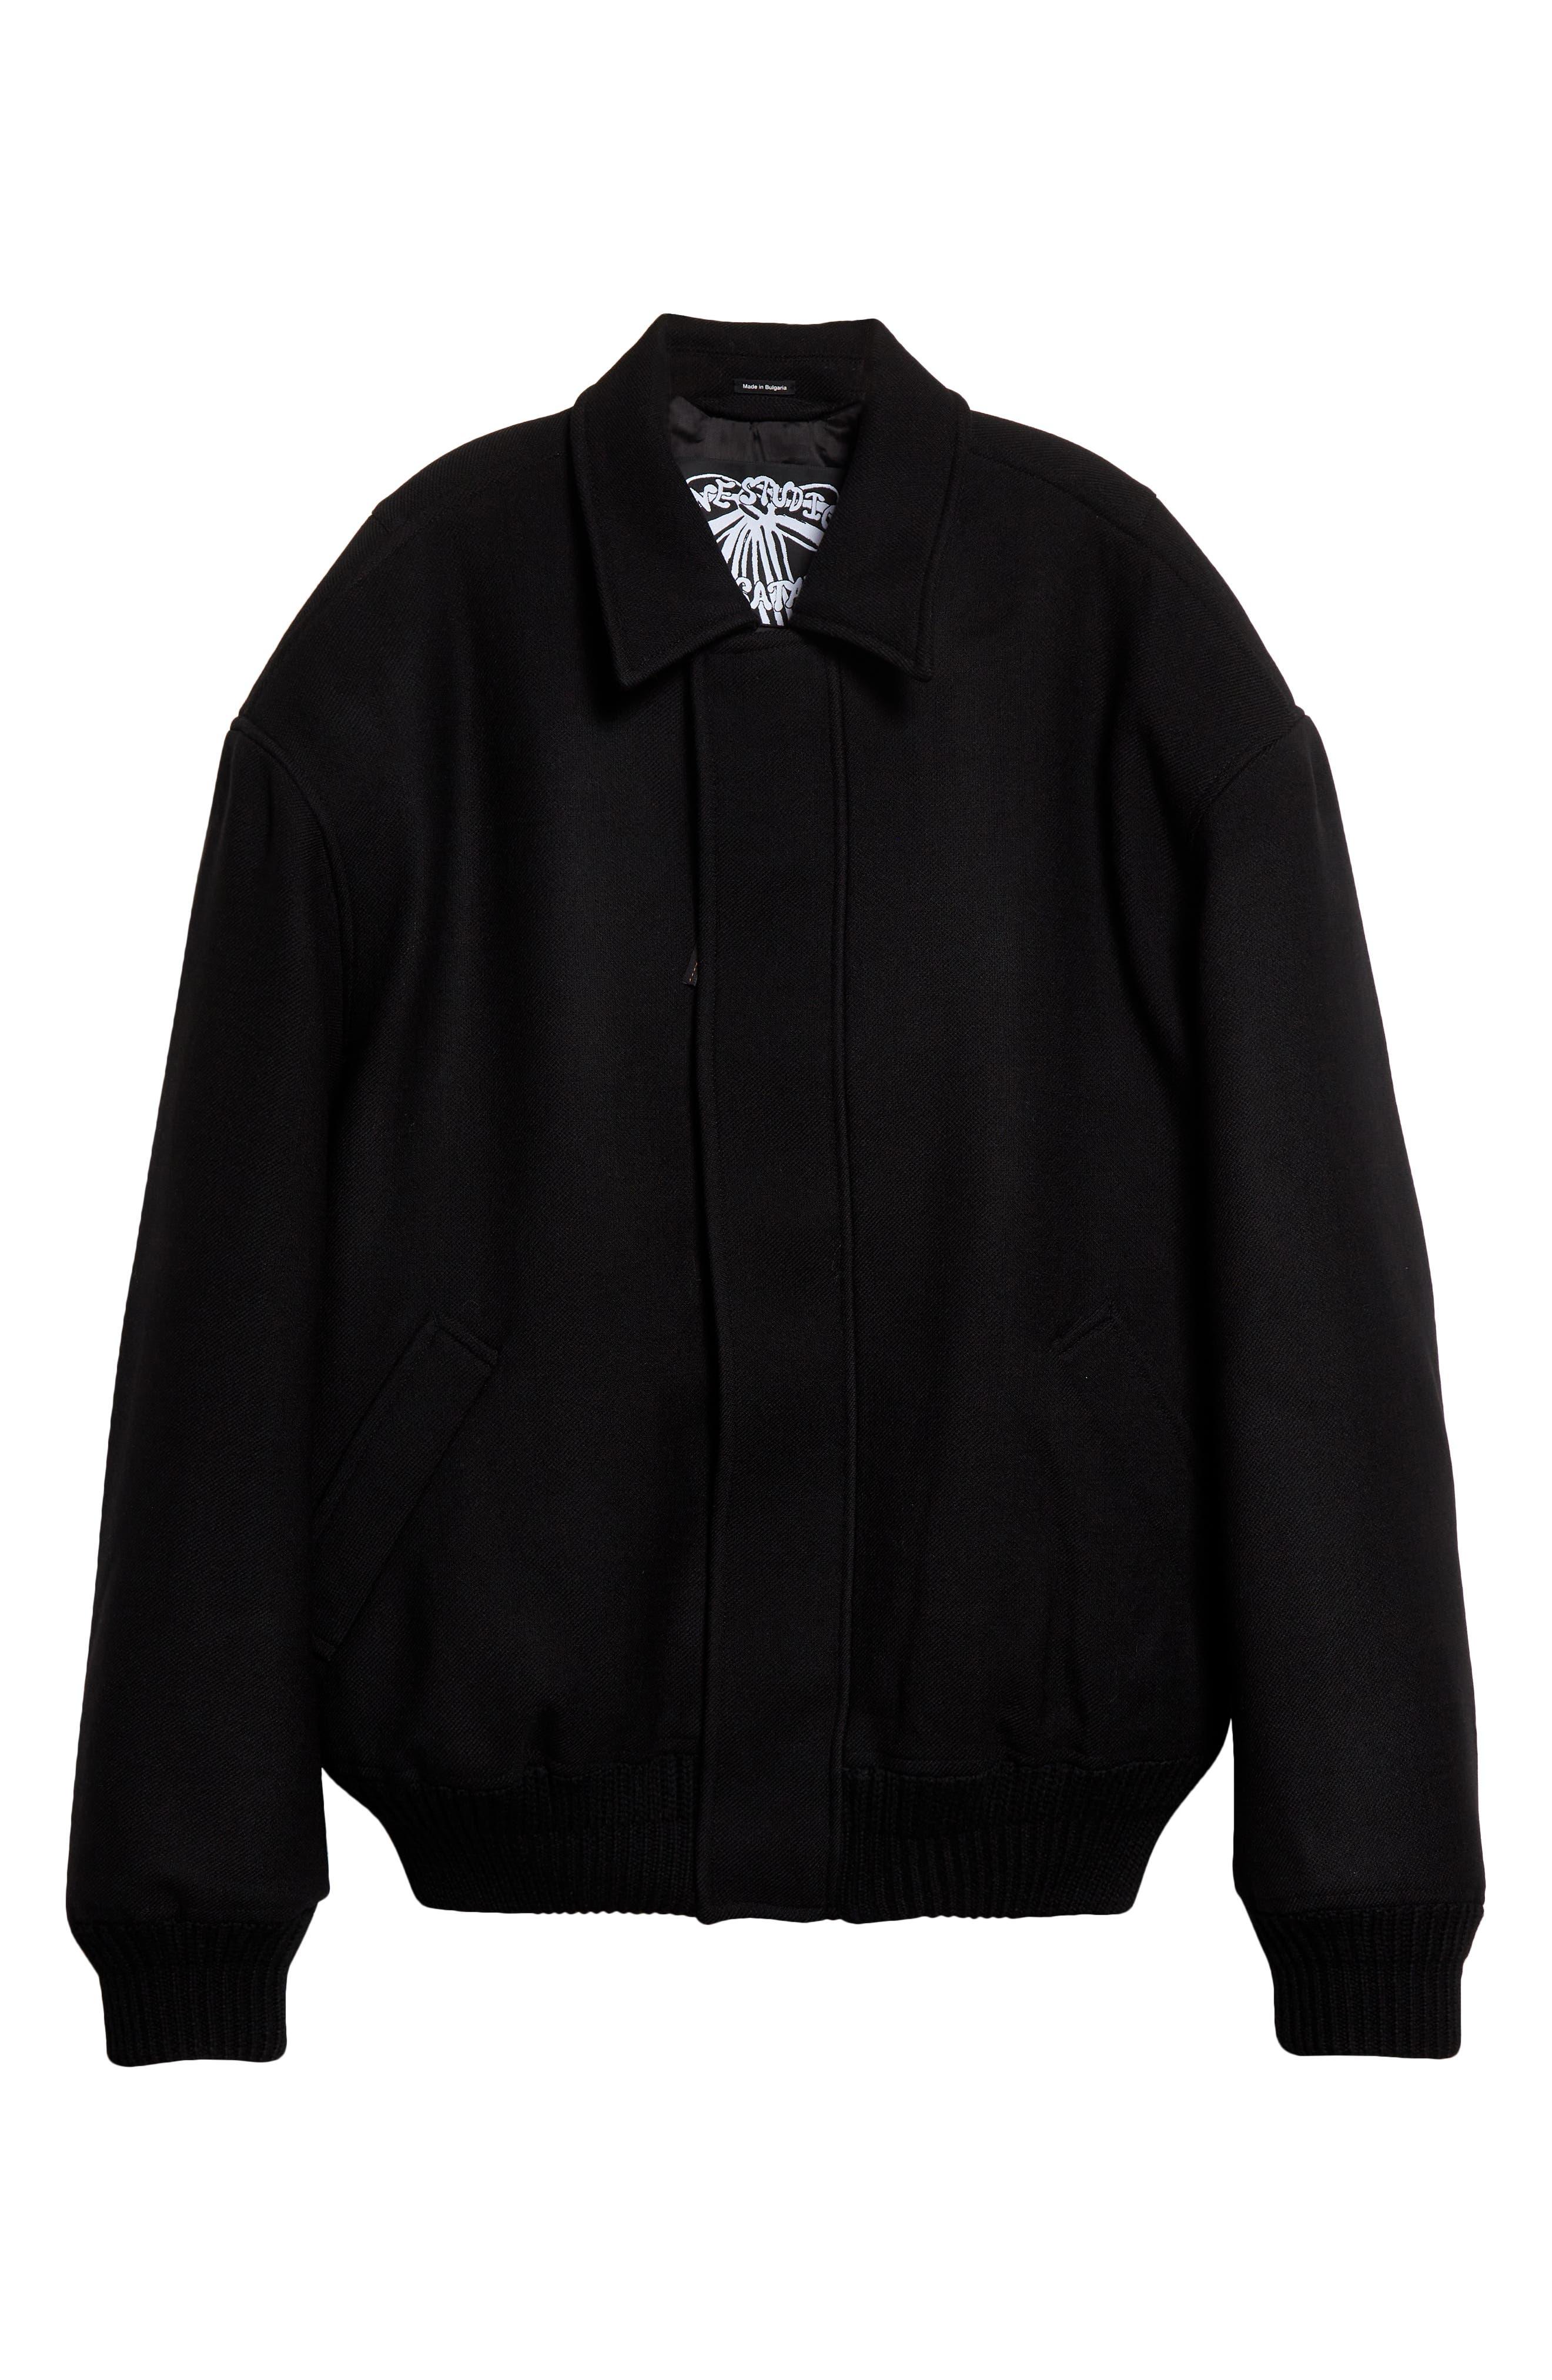 Acne Studios Wool Bomber Jacket in Black for Men | Lyst